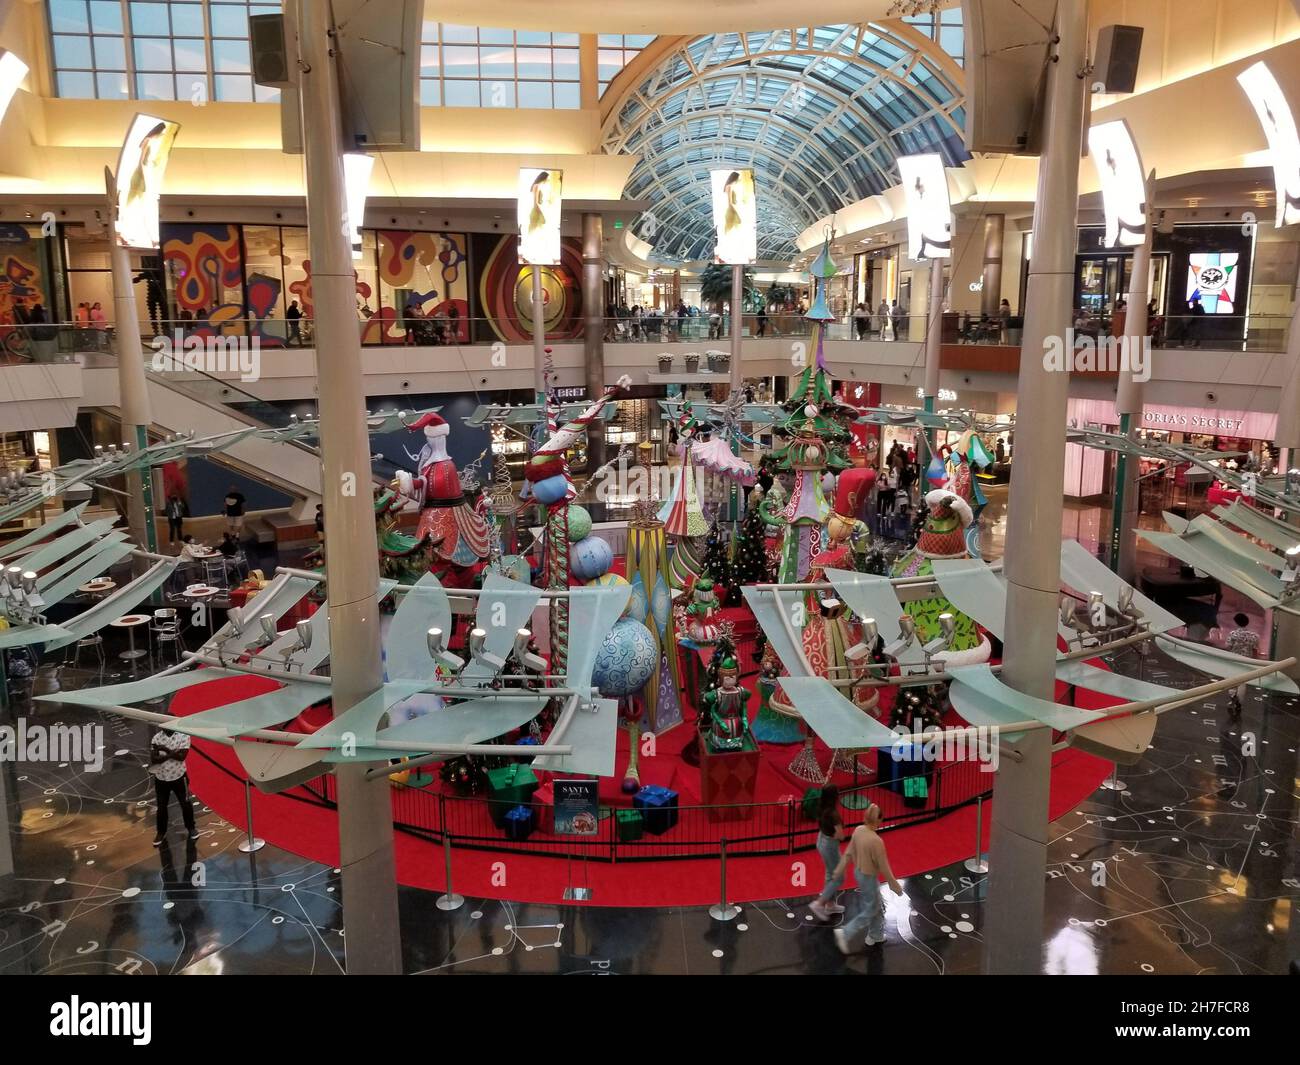 Orlando Florida, Mall at Millenia upscale shopping mall and popular tourist  destination Stock Photo - Alamy